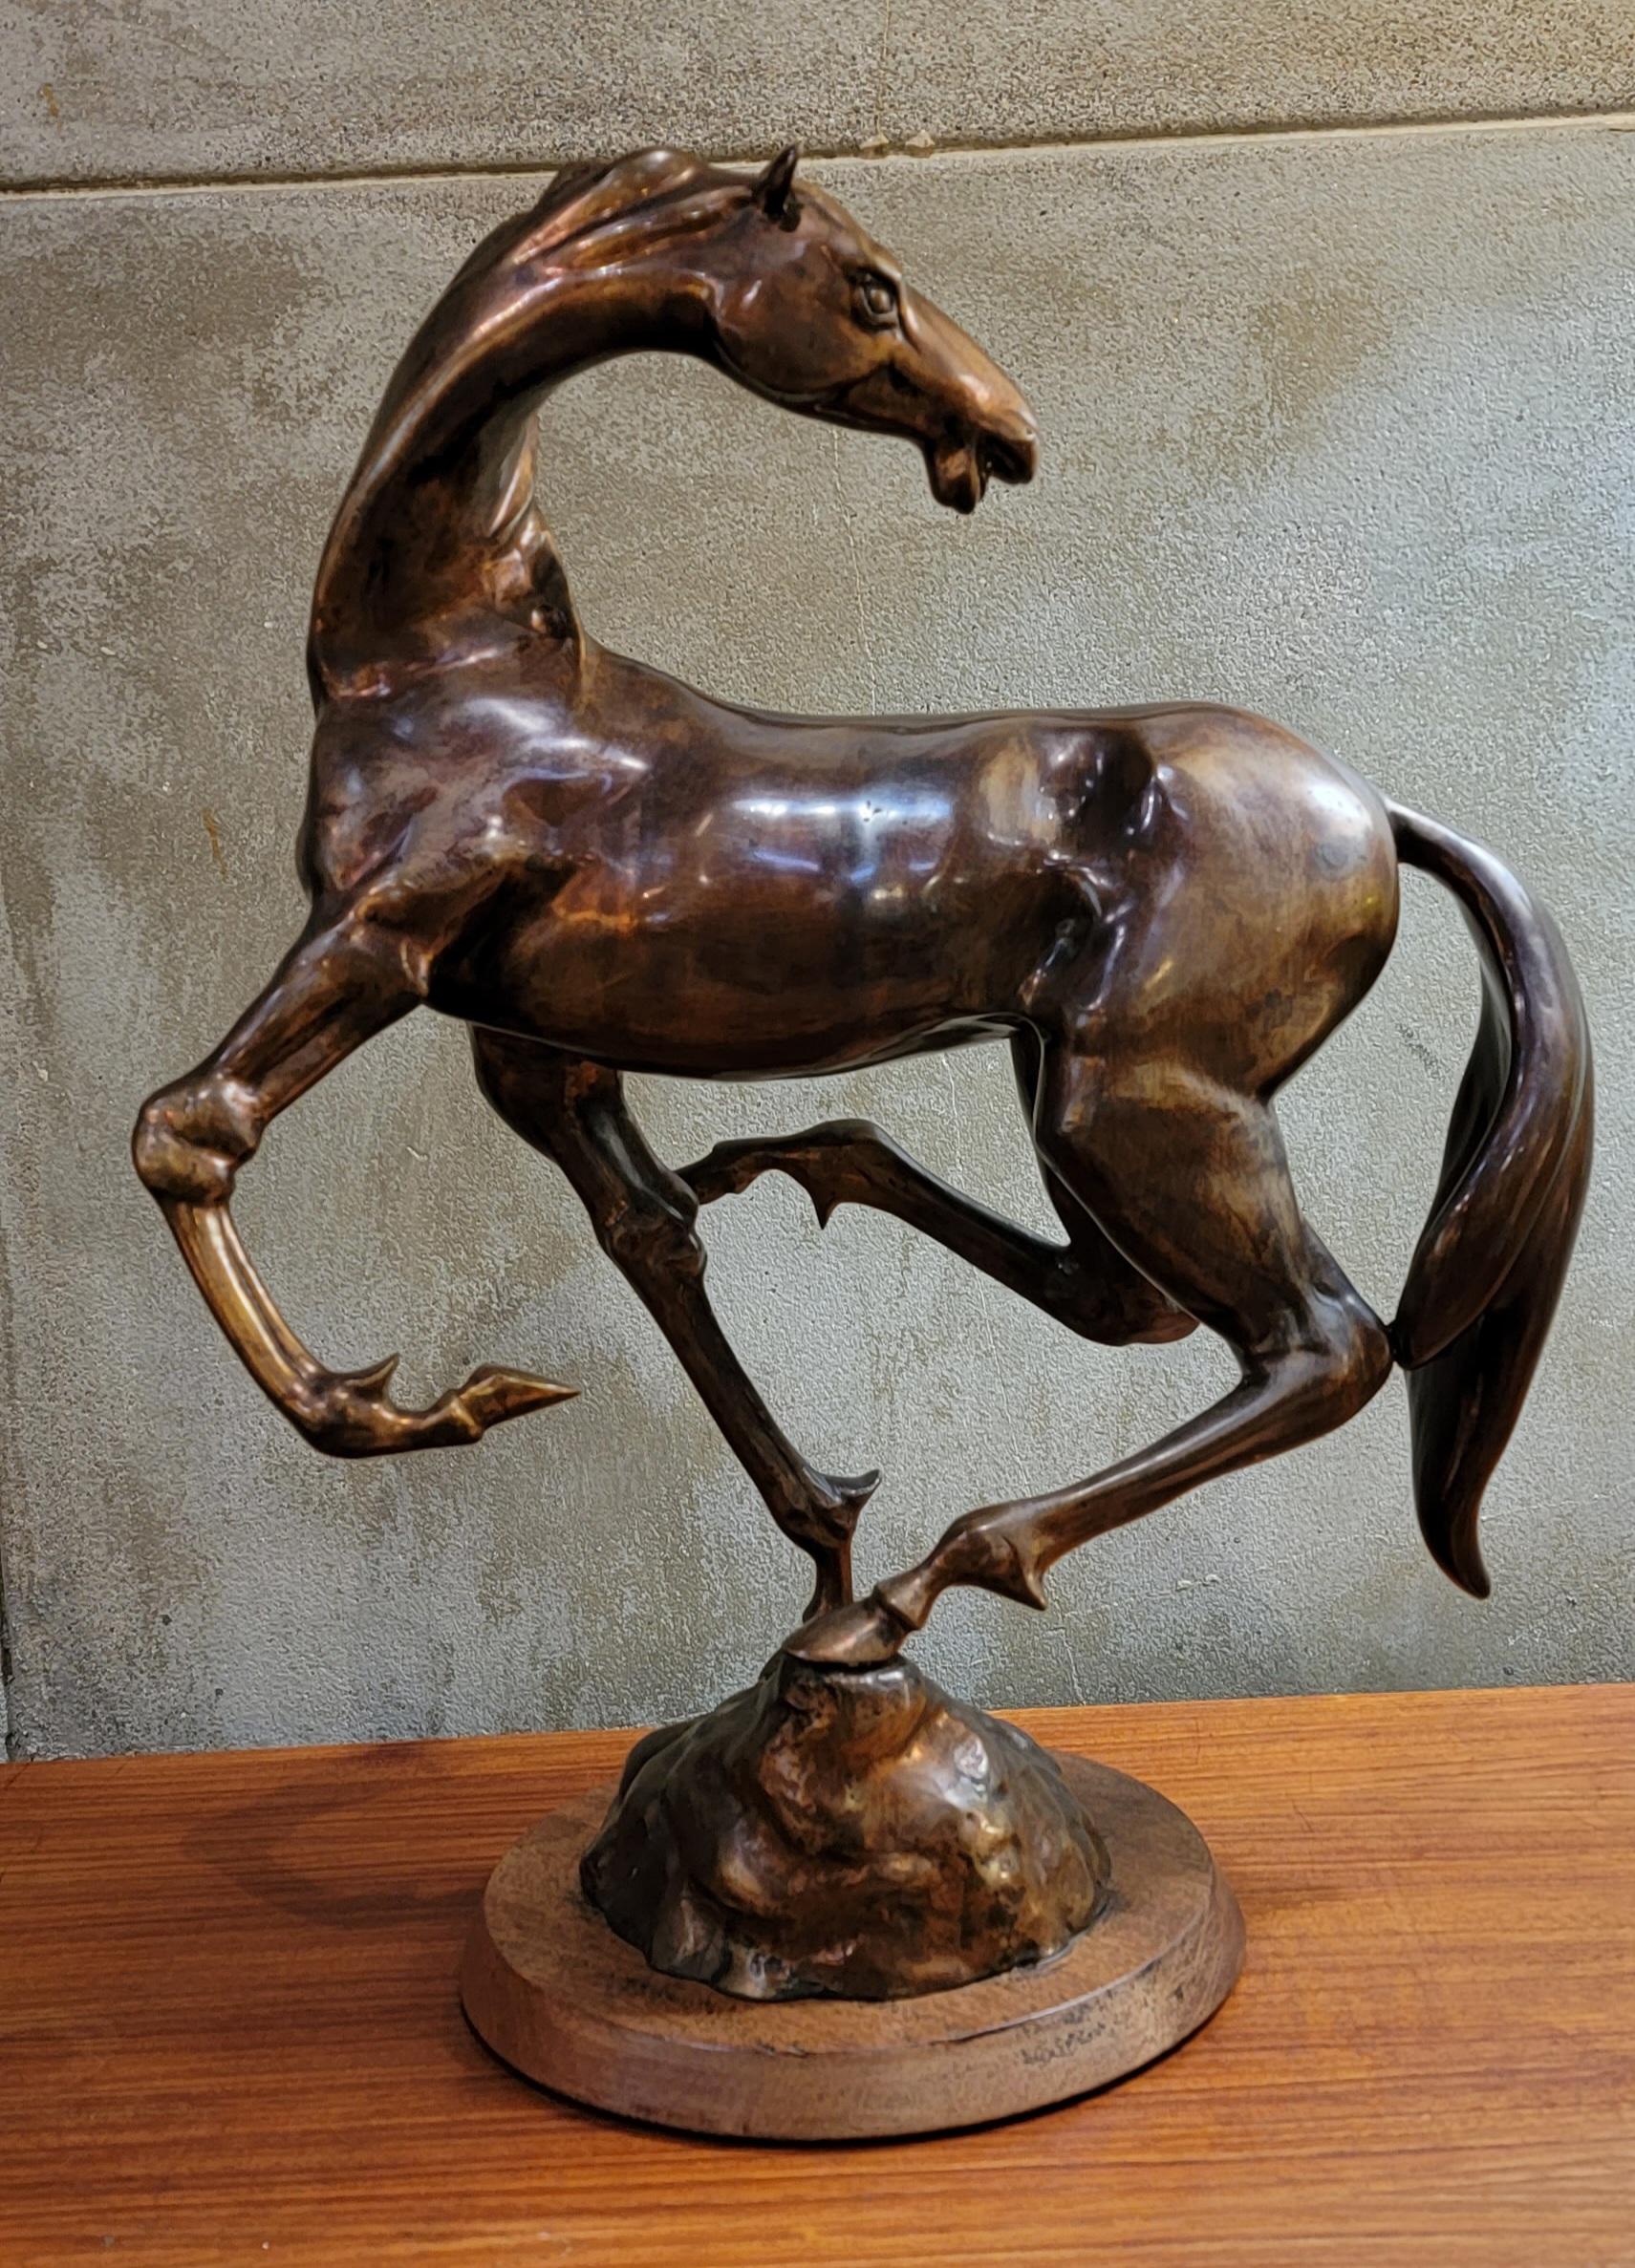 Rearing horse bronze sculpture by Hattakitkosol Somchai. Measures 21.13